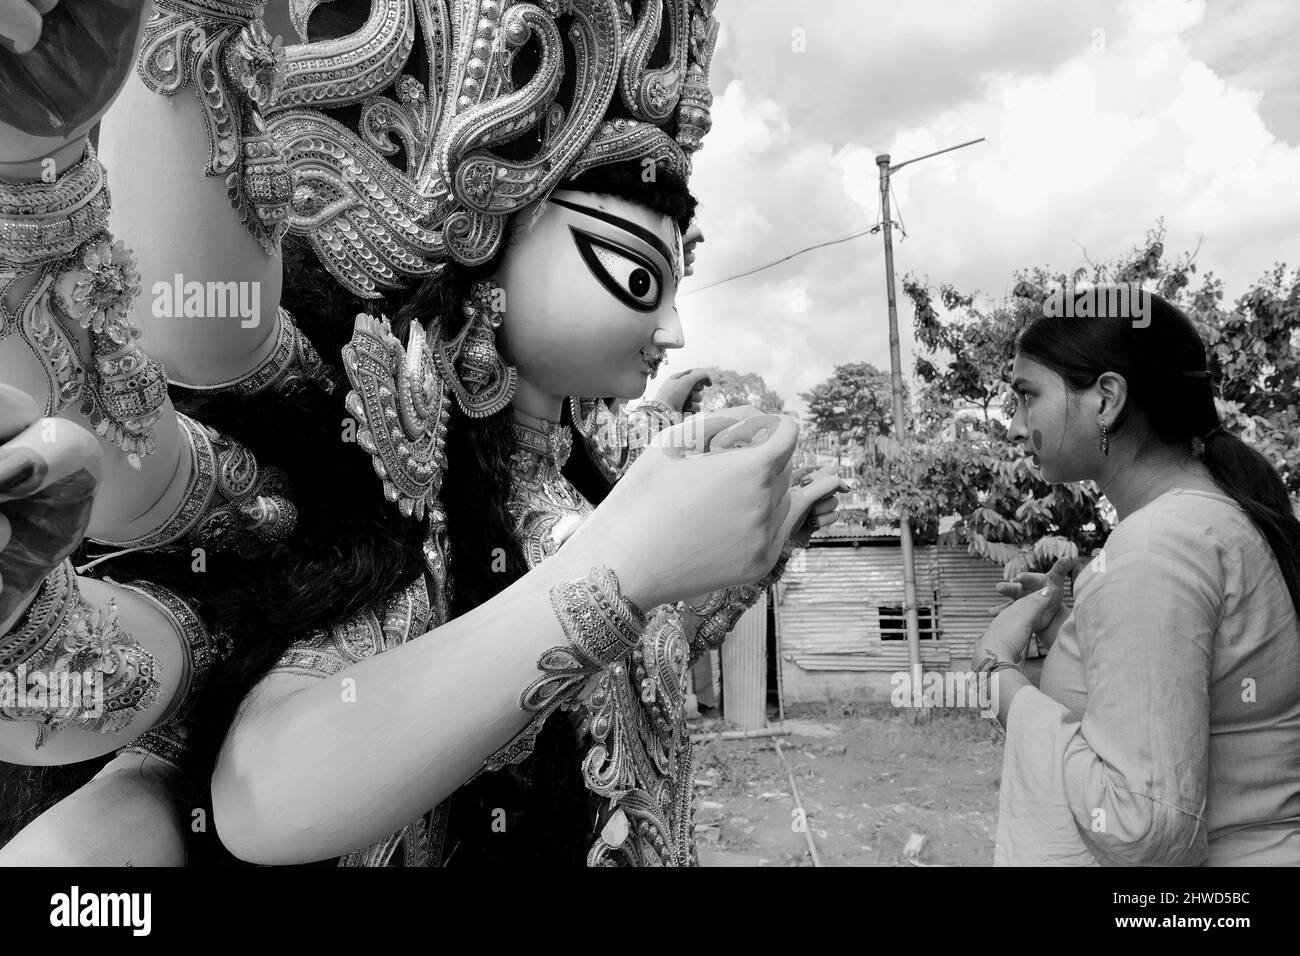 Bengali girl Black and White Stock Photos & Images - Alamy